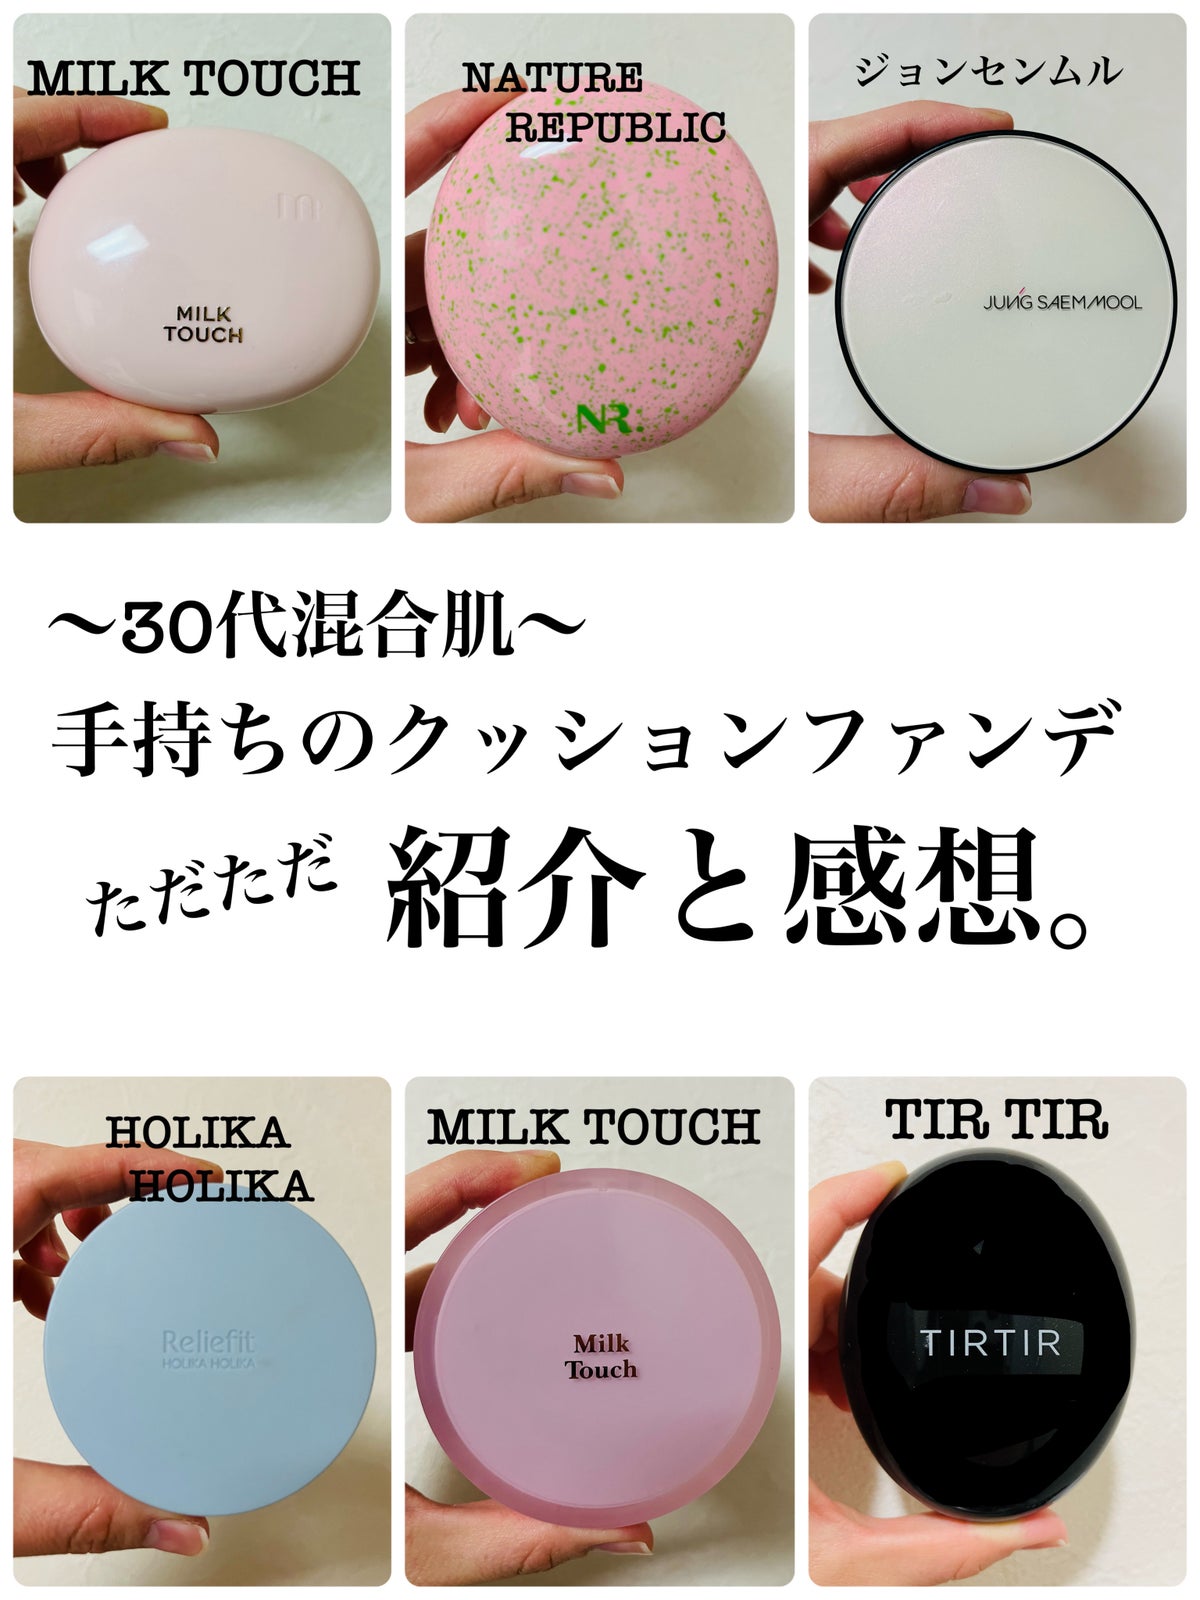 JUNG SAEM MOOL・TIRTIR(ティルティル)・Milk Touch・ネイチャー